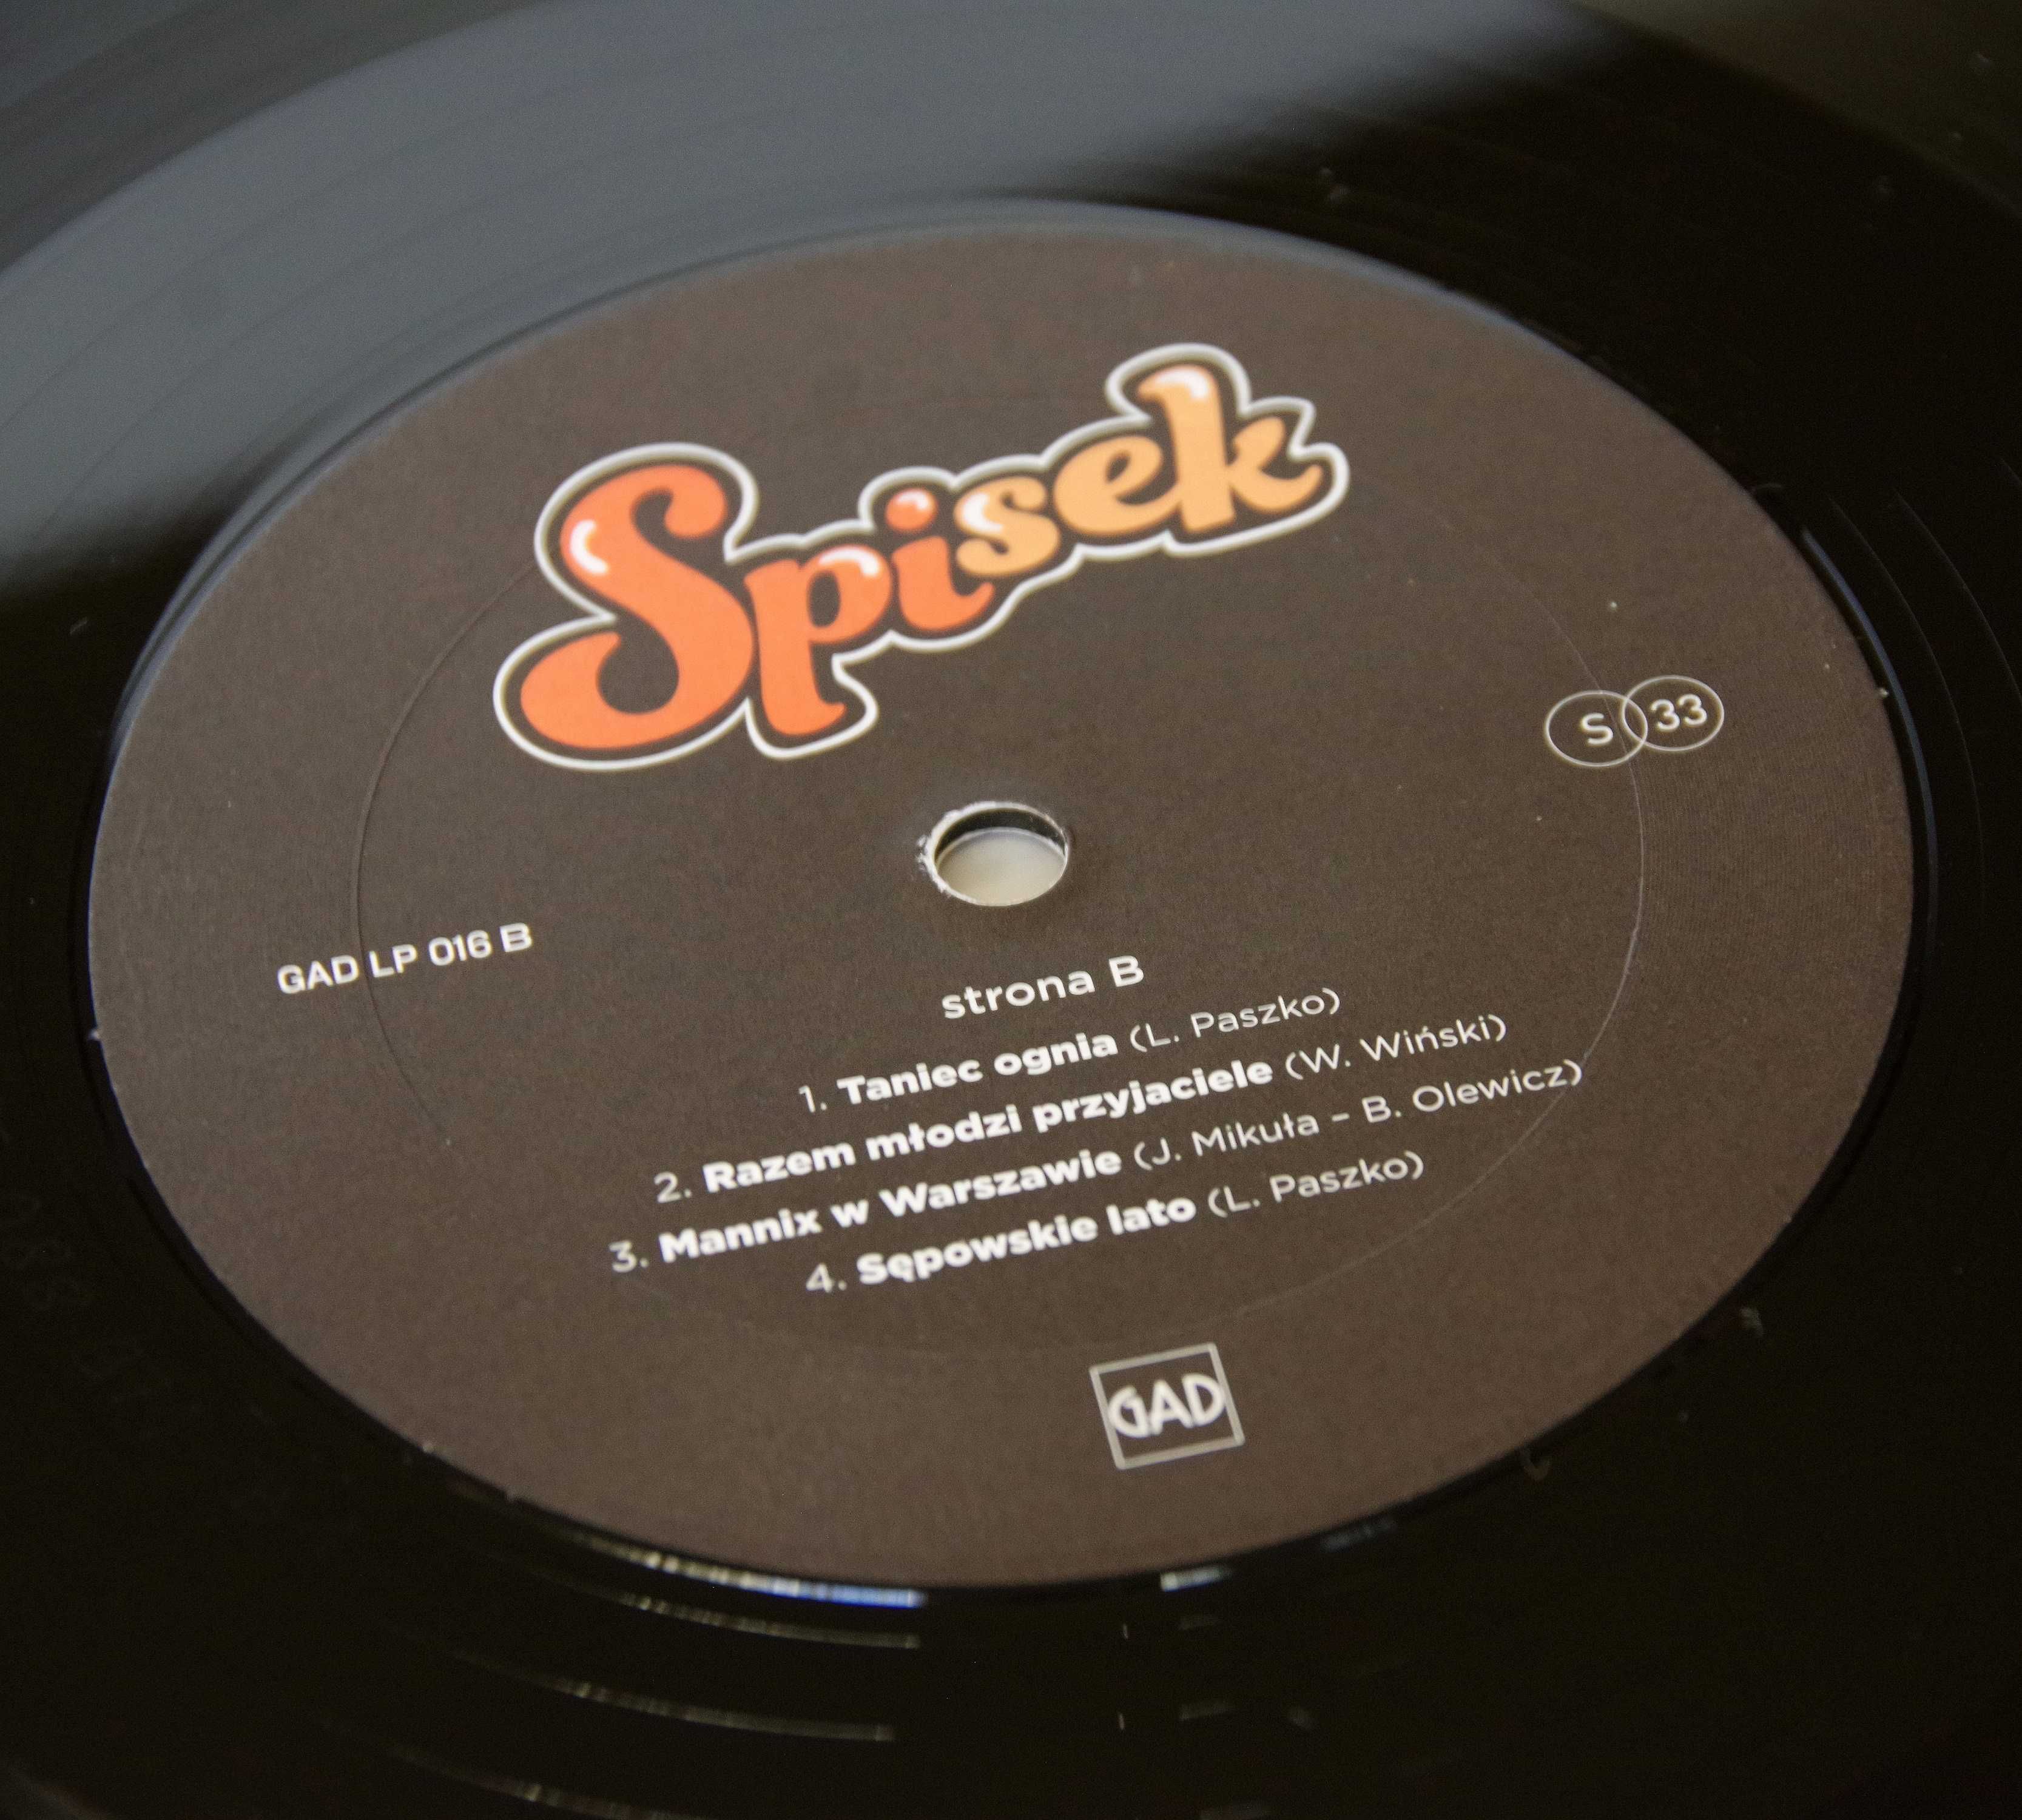 Spisek - LP 180g - GAD Records 2018